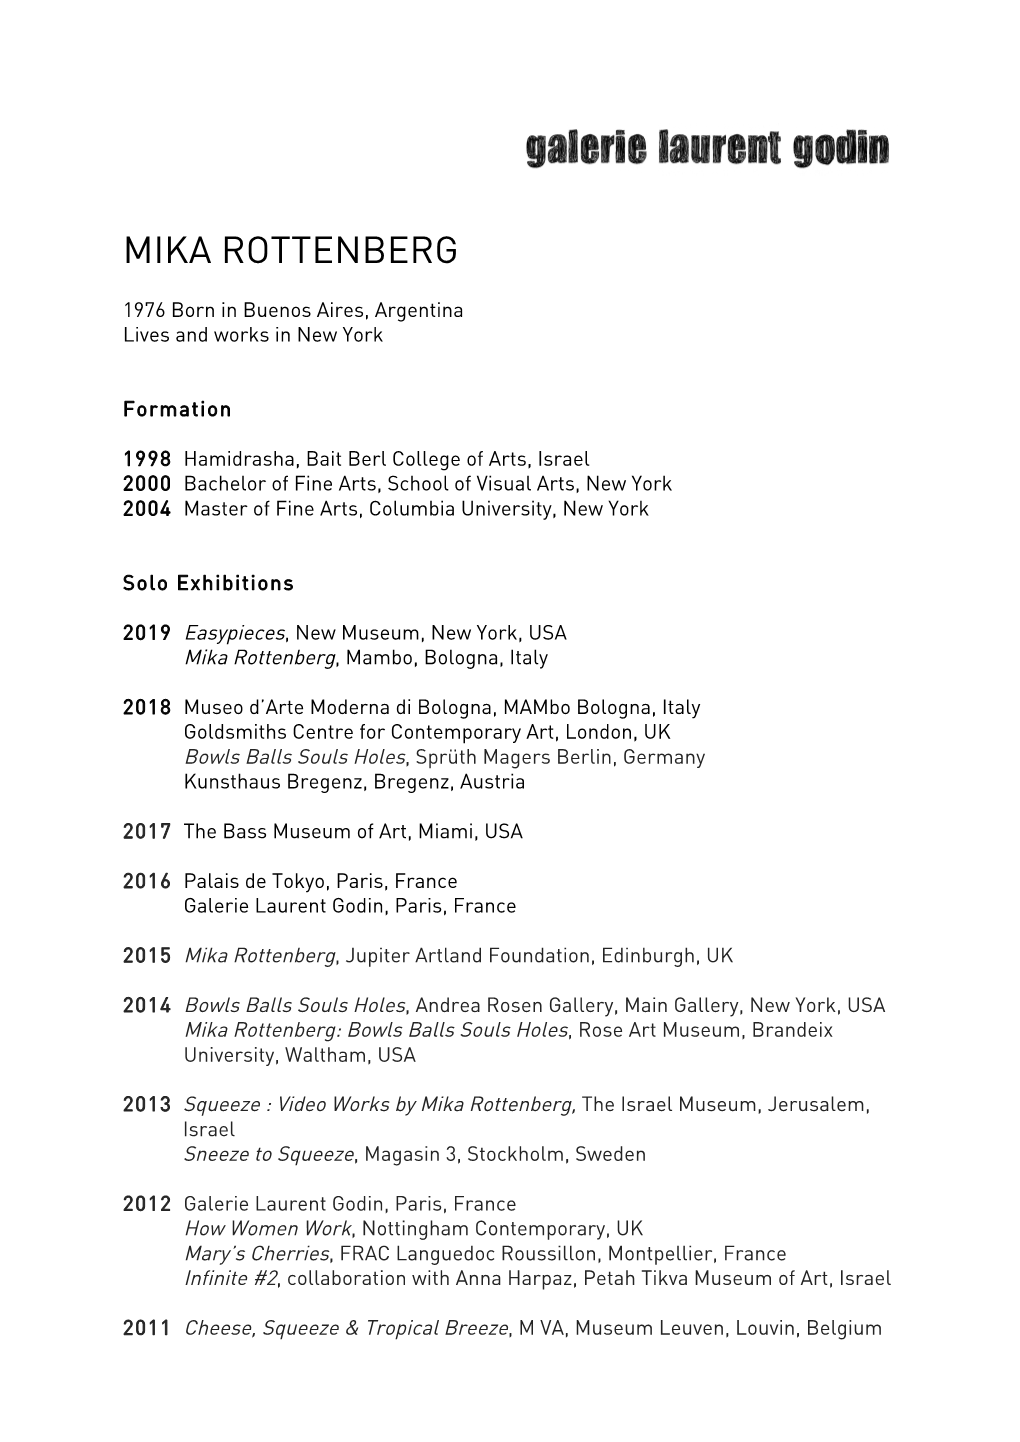 Mika Rottenberg